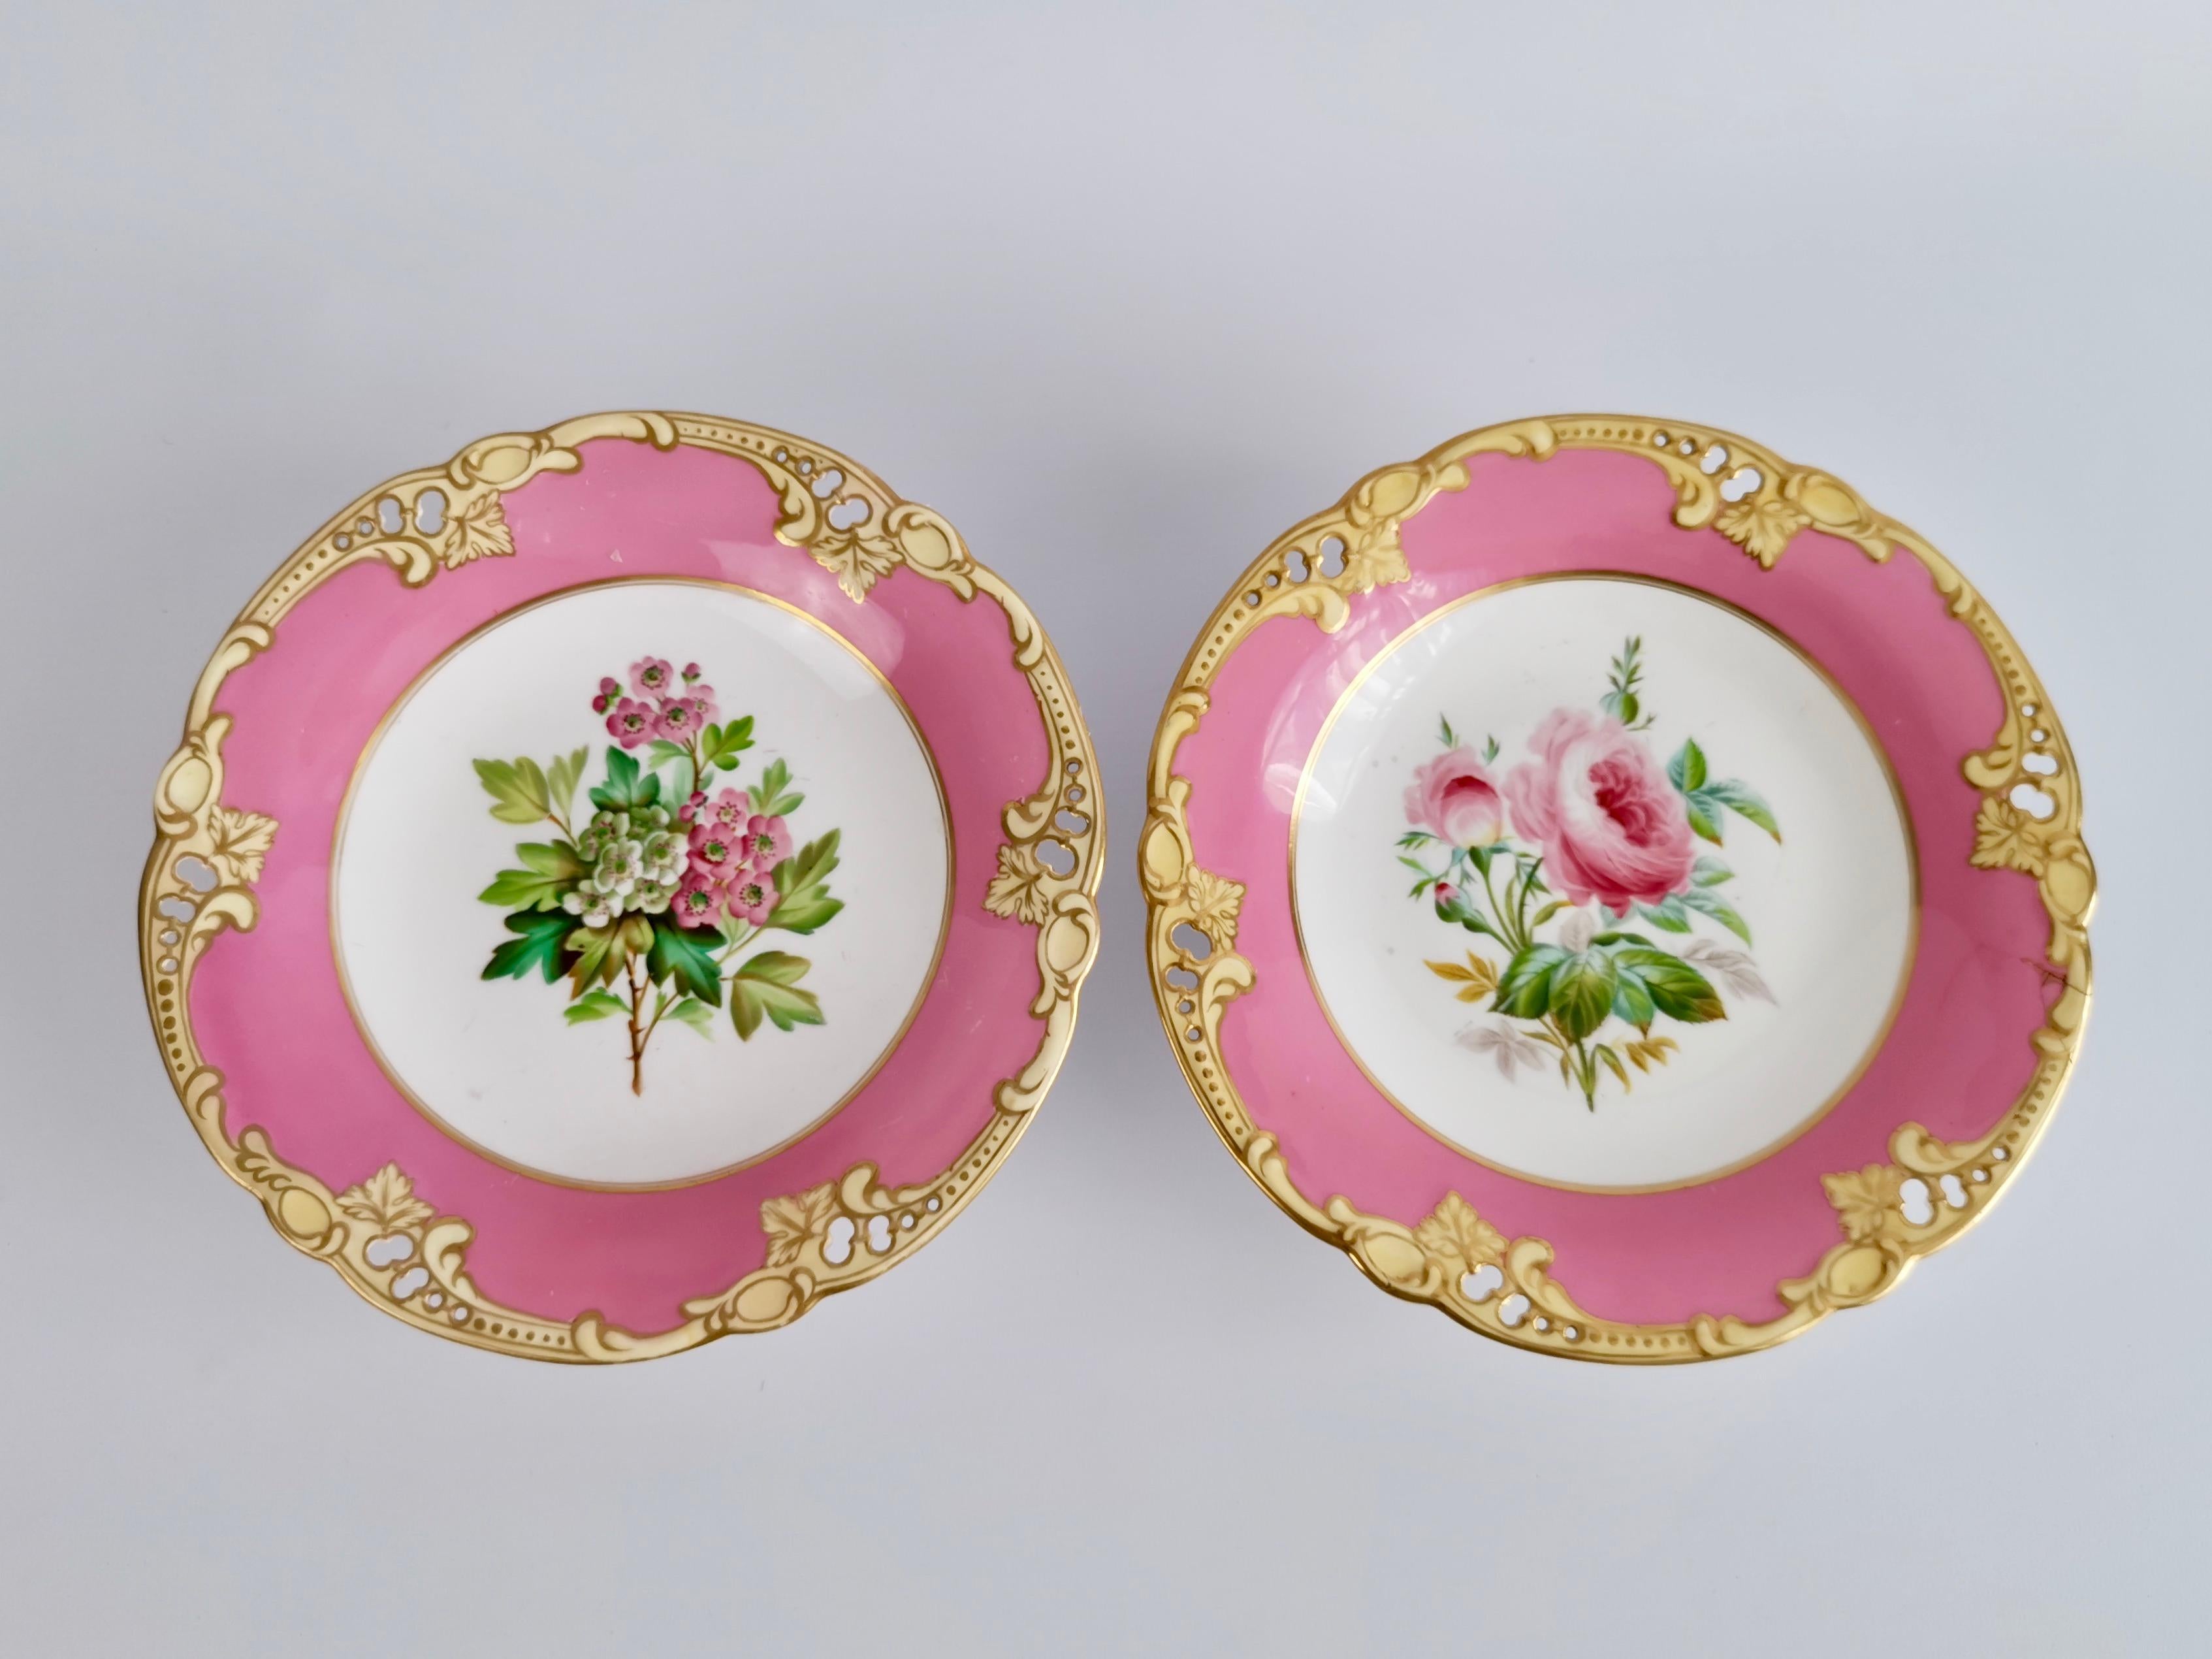 Hand-Painted Brown Westhead & Moore Porcelain Dessert Service, Hot Pink Botanical, circa 1860